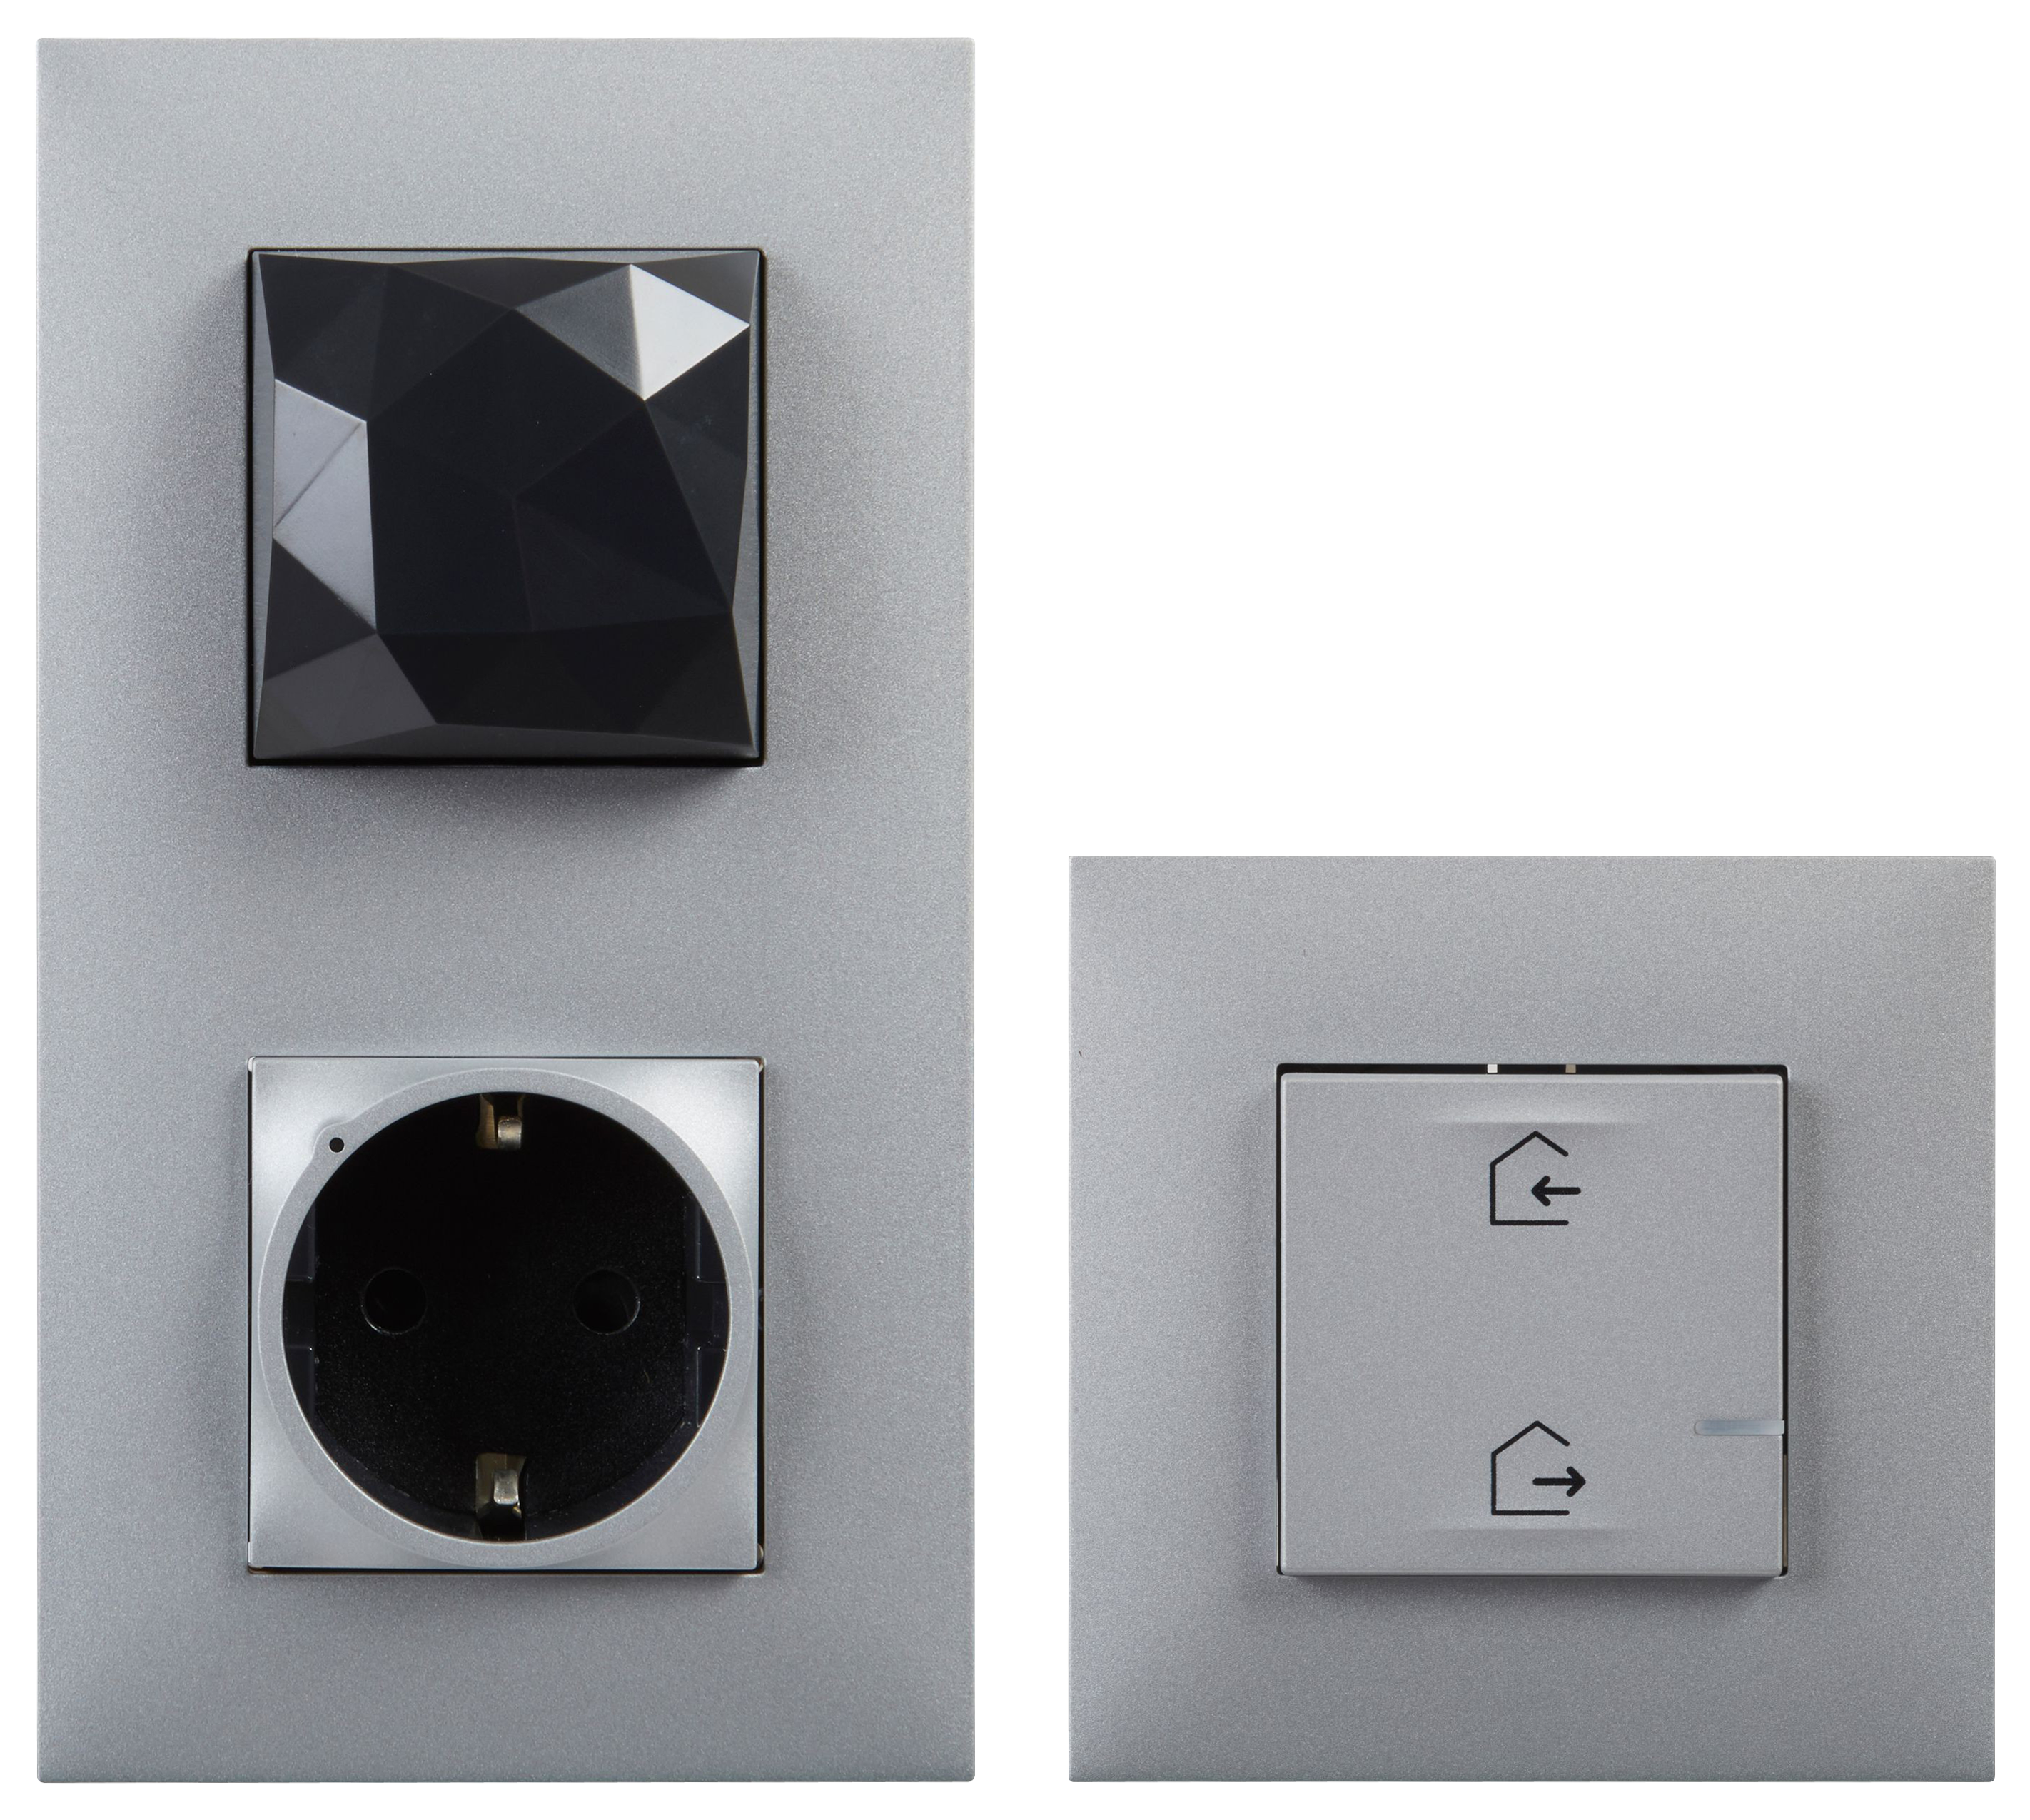 Interruptores de luz modernos en negro sobre pared blanca